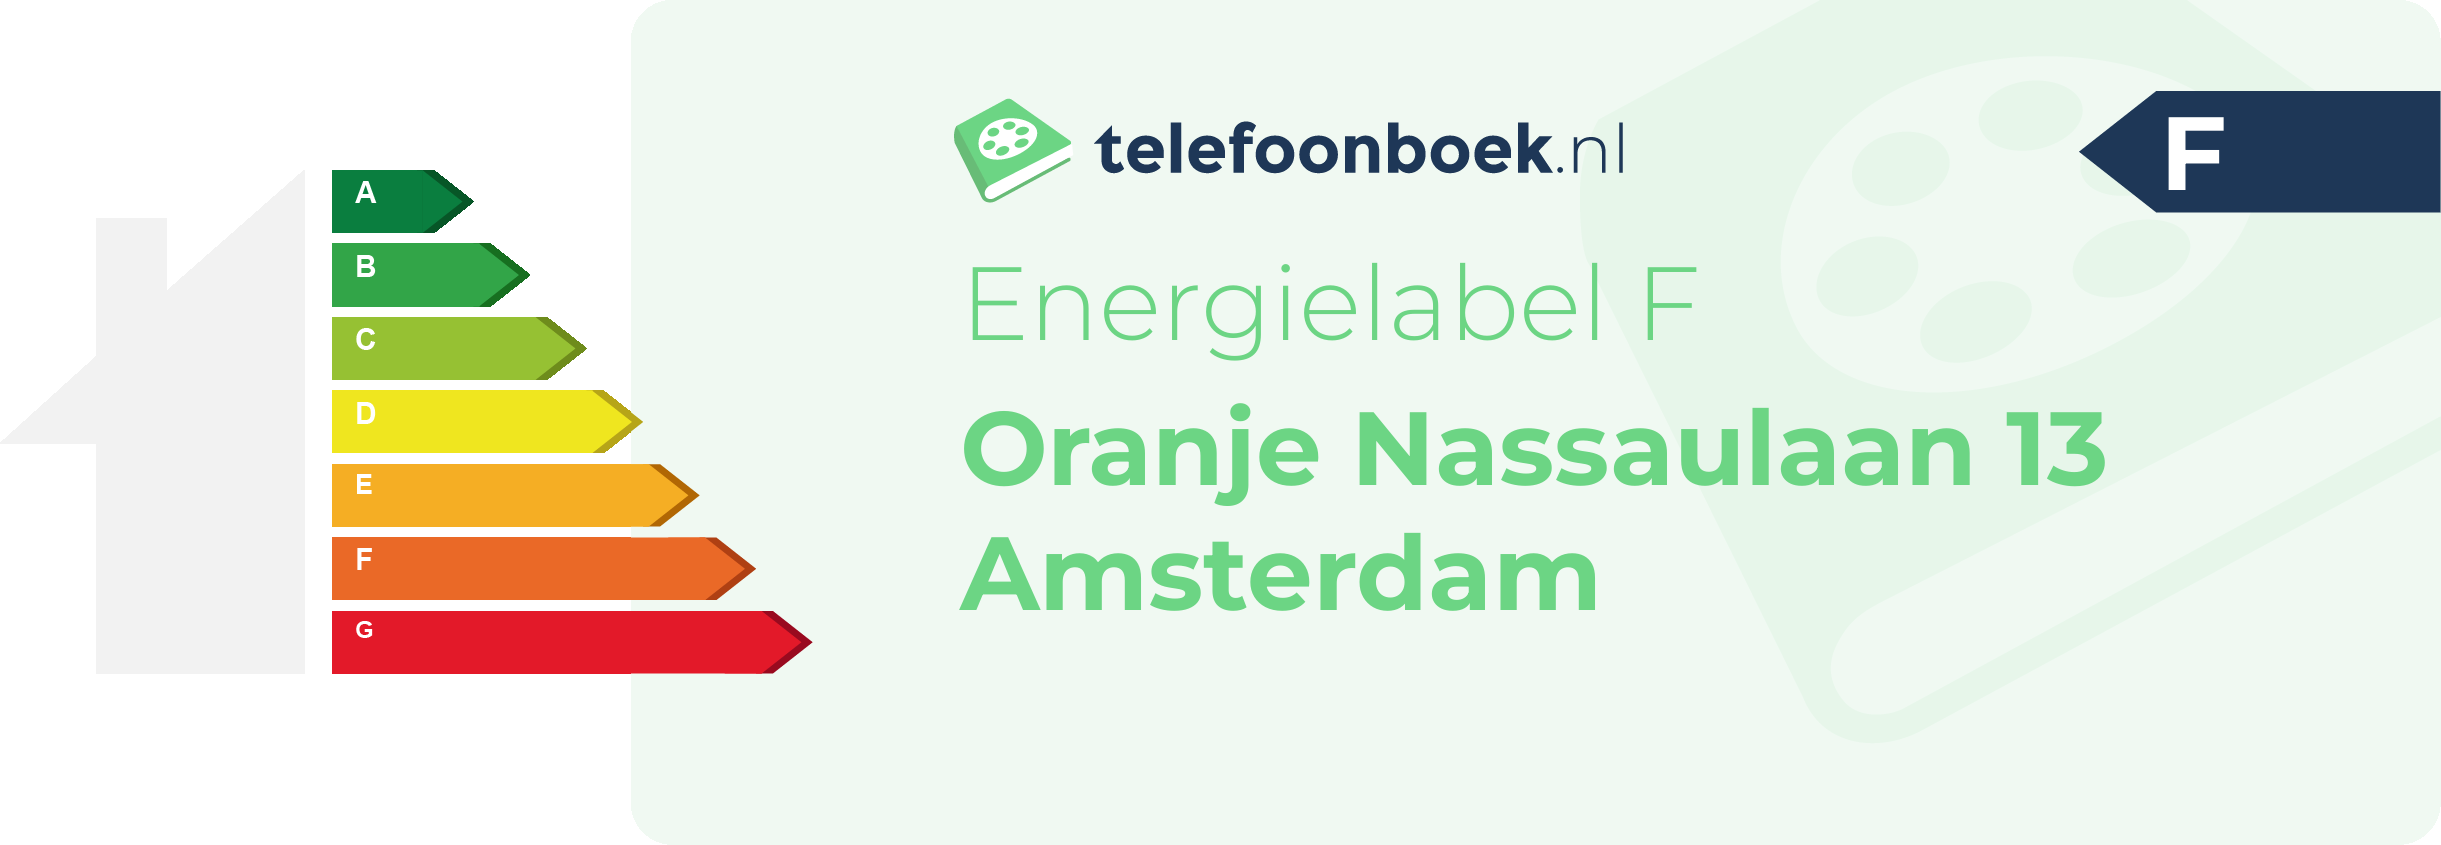 Energielabel Oranje Nassaulaan 13 Amsterdam